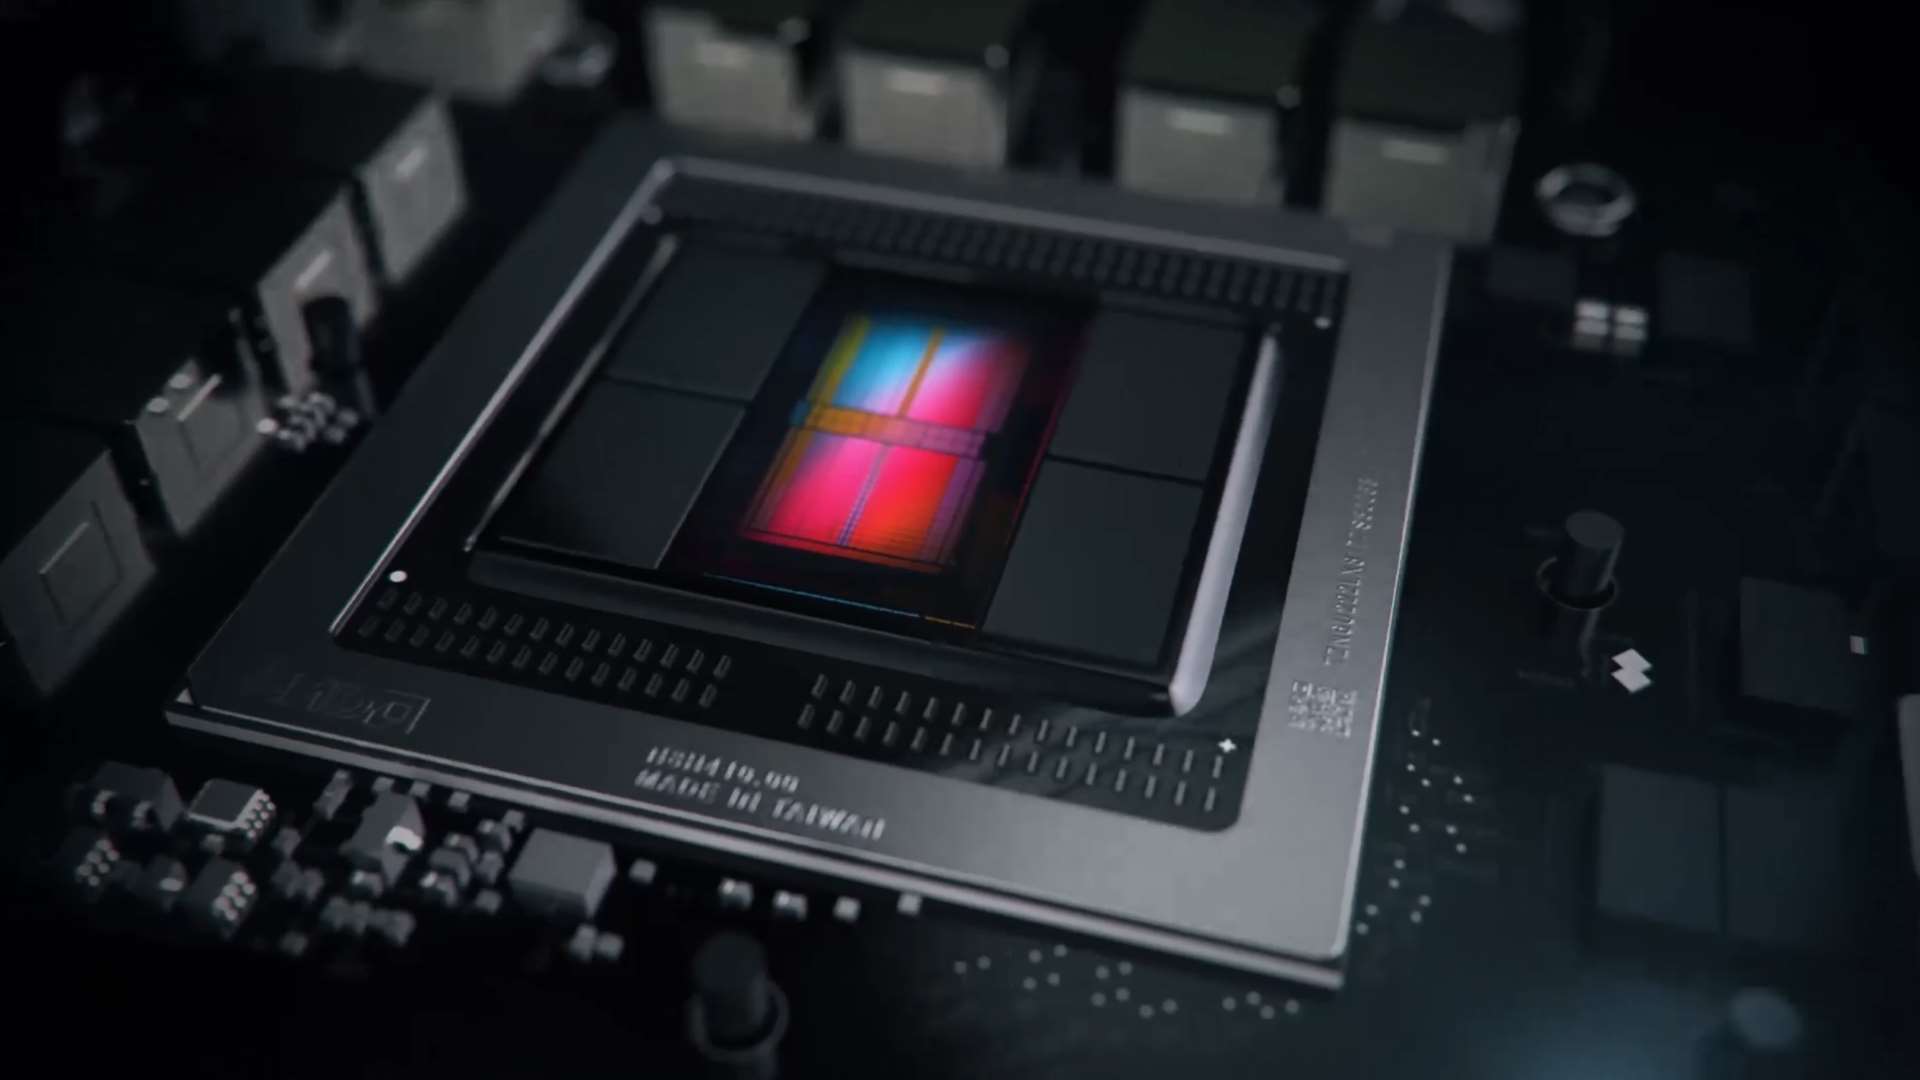 AMD teases third-gen Ryzen processor performance ahead of mid-2019 launch